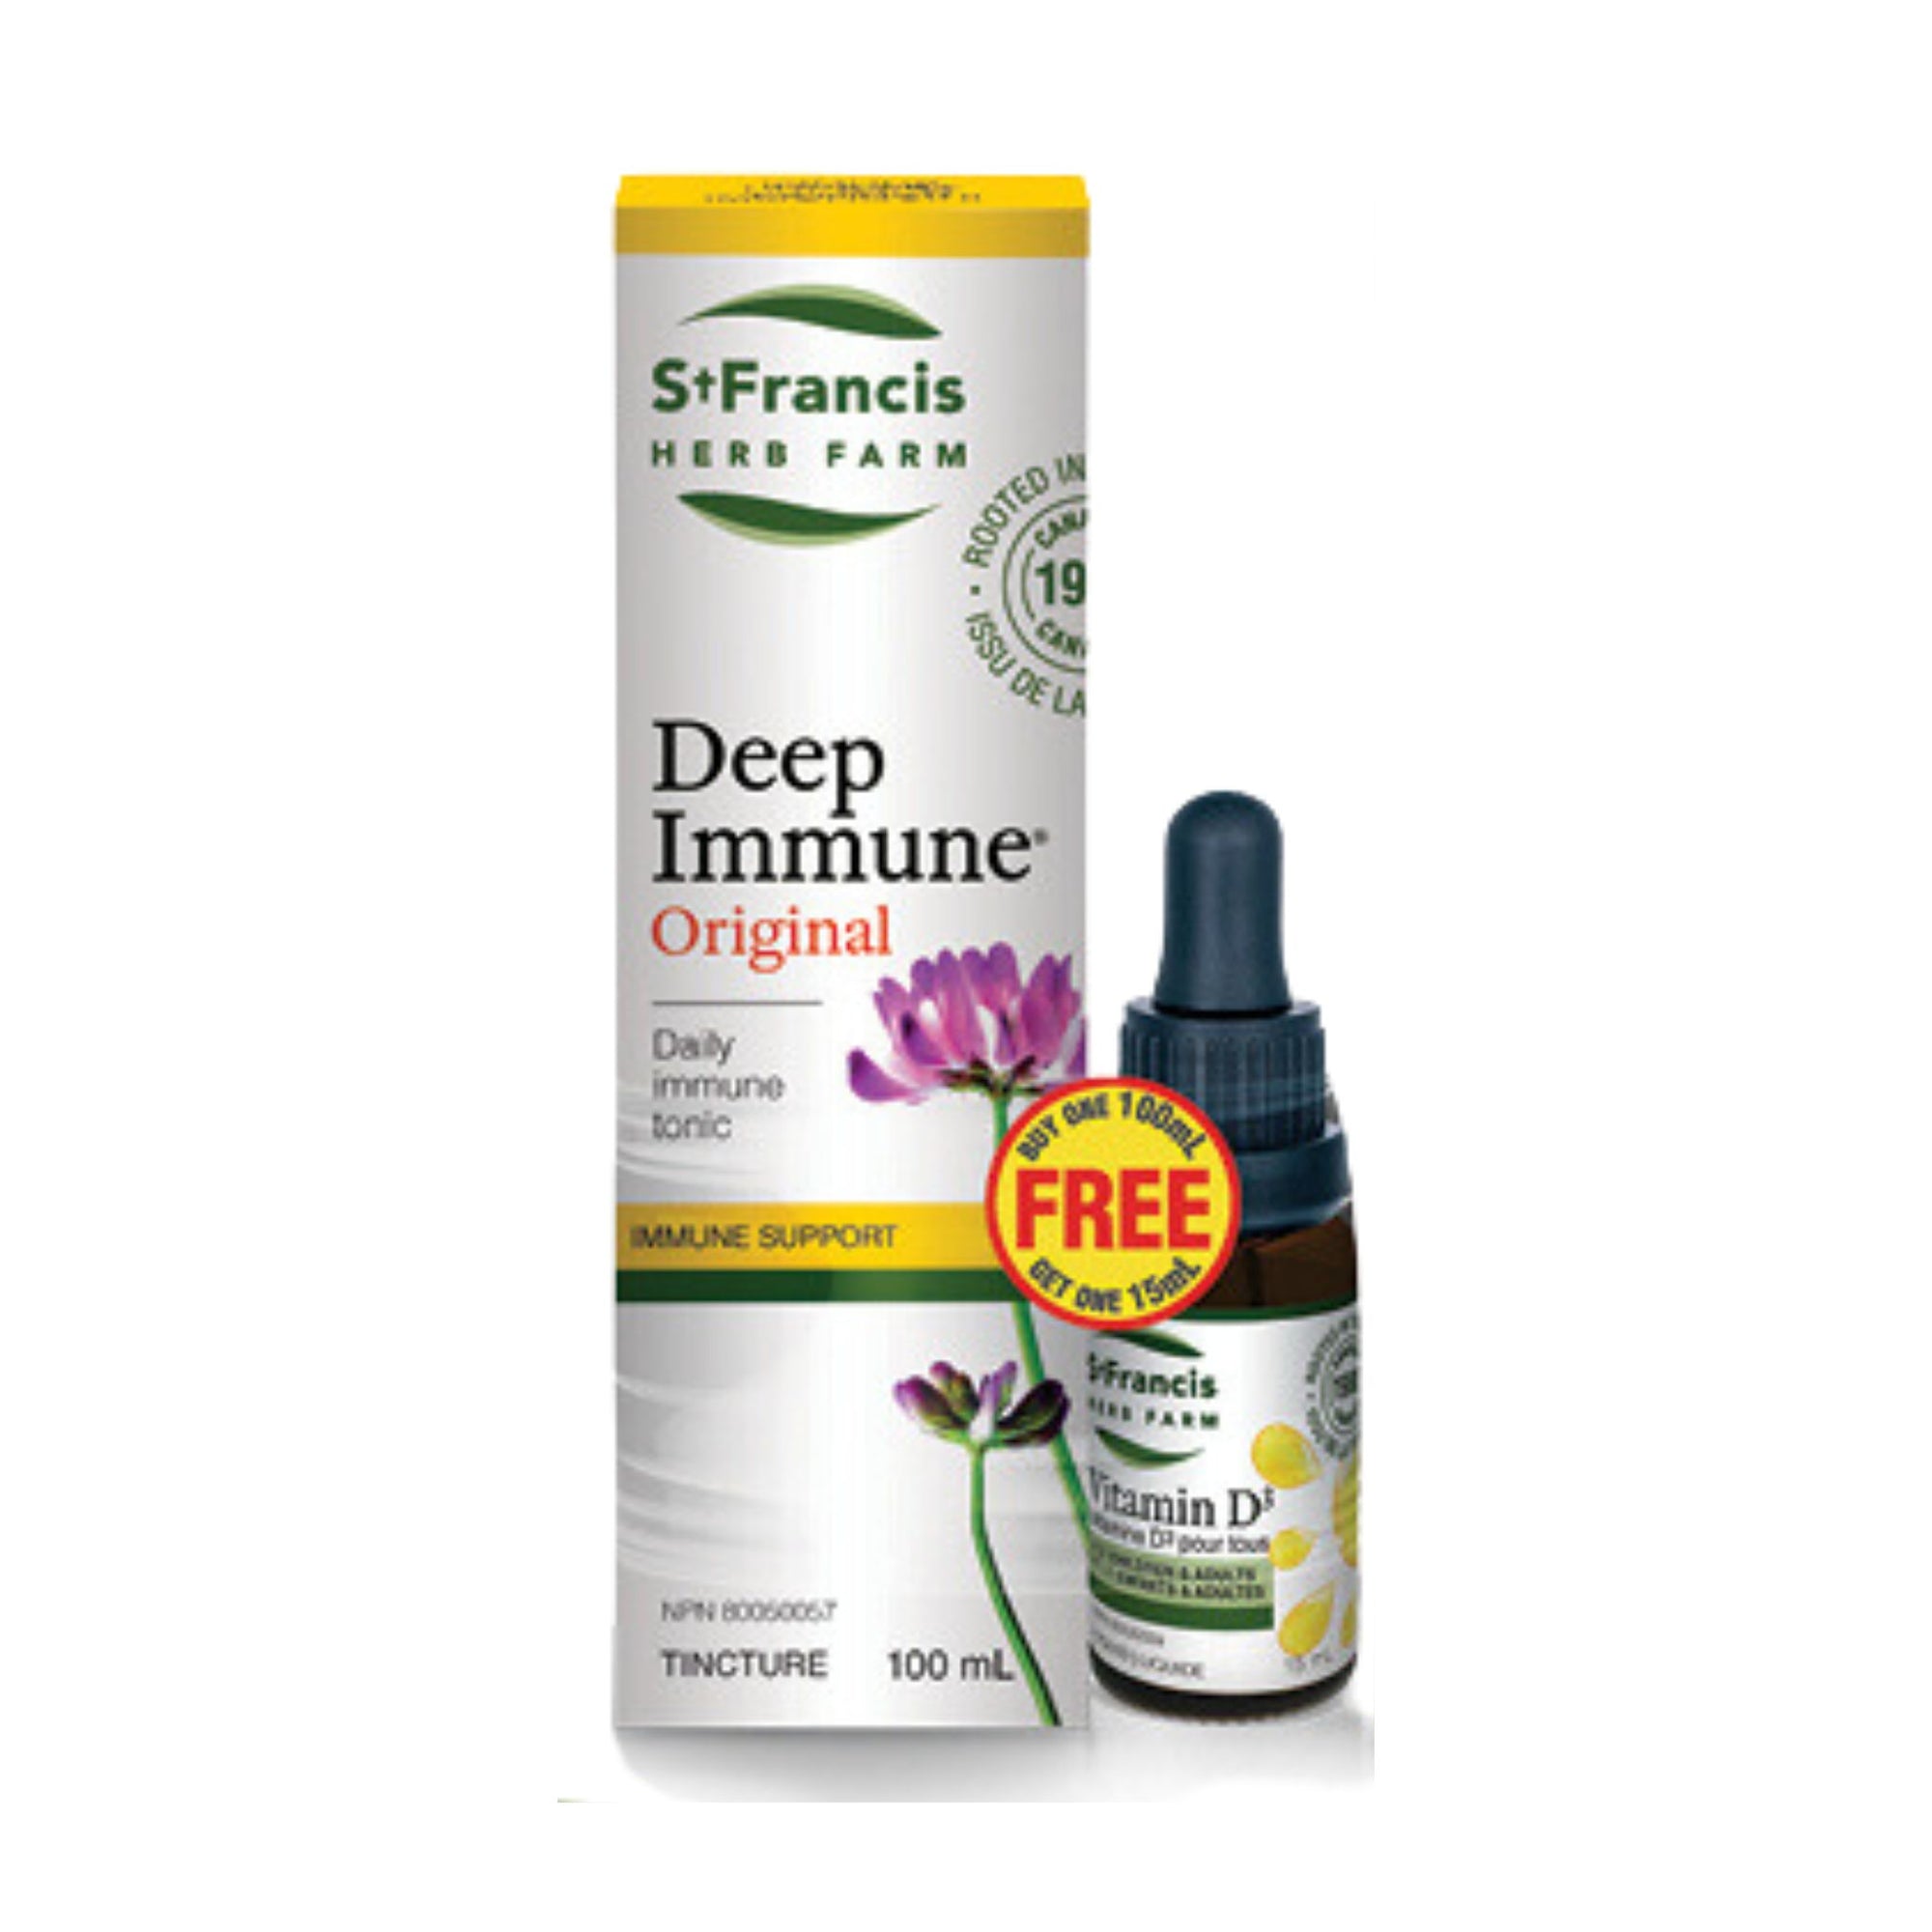 St Francis Deep Immune 100ml + Vitamin D3 15ml BONUS